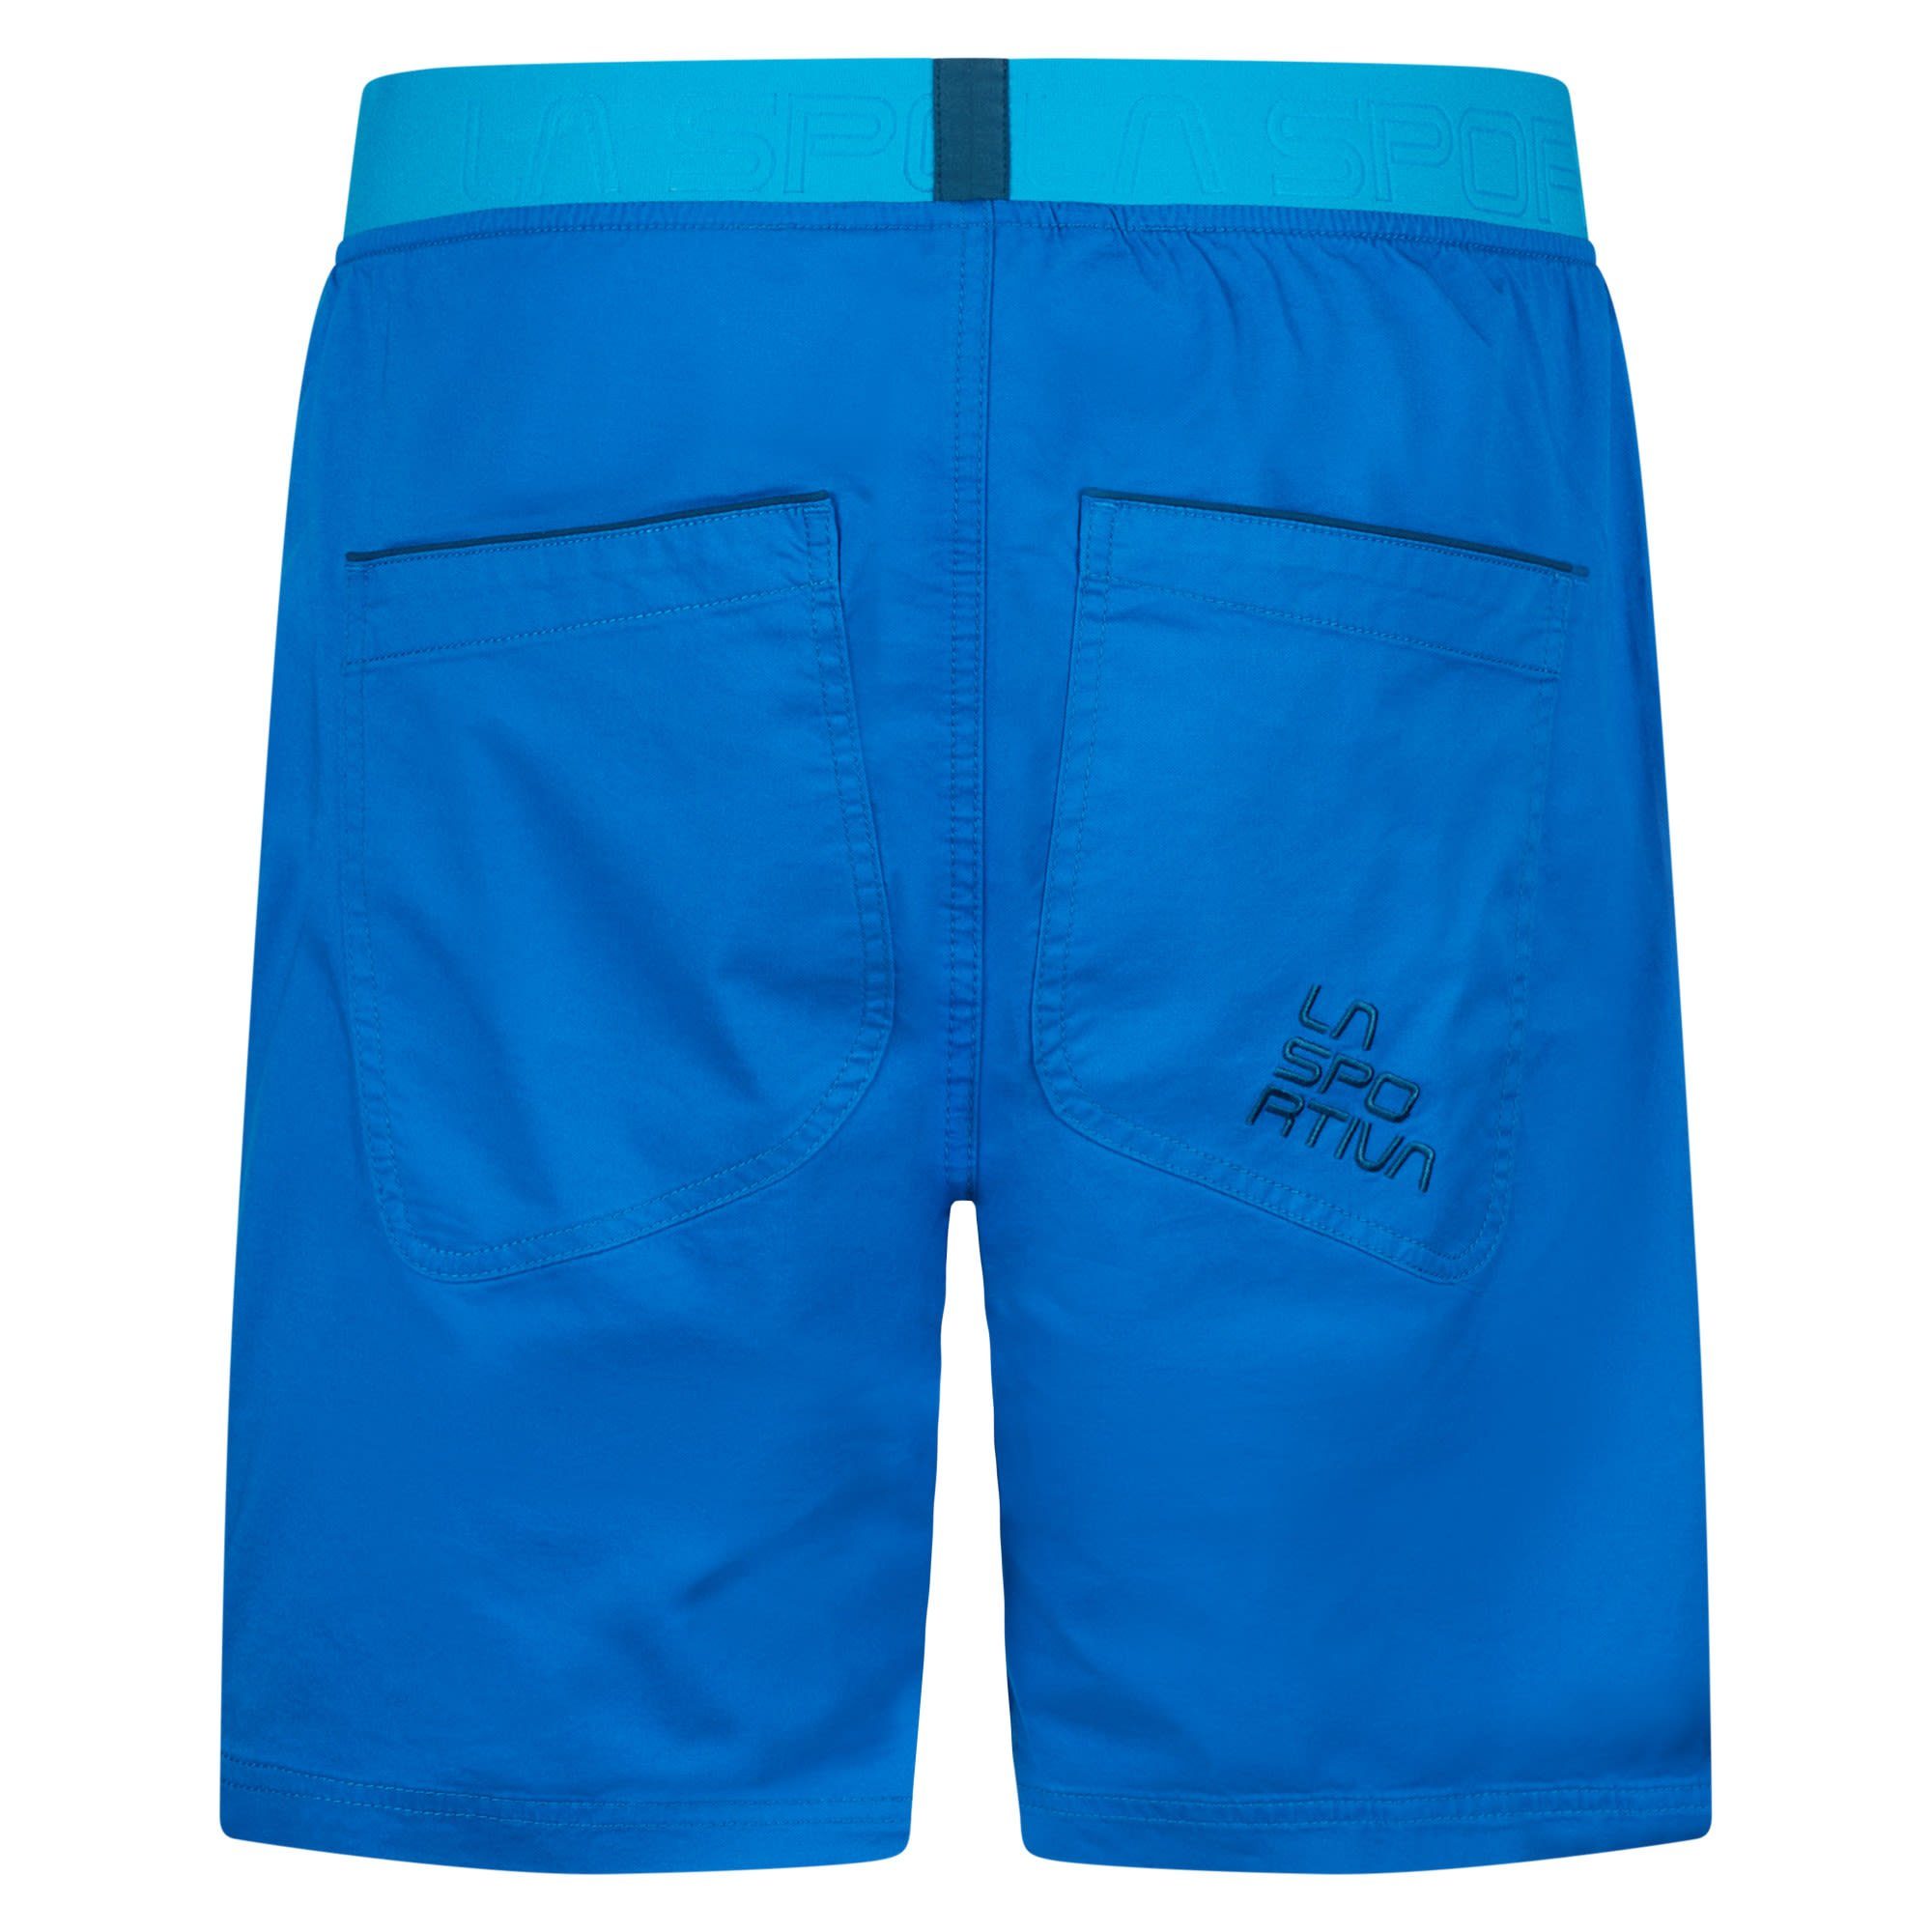 Electric Blue La La Shorts M Sportiva Short Maui - Strandshorts Sportiva Esquirol Herren